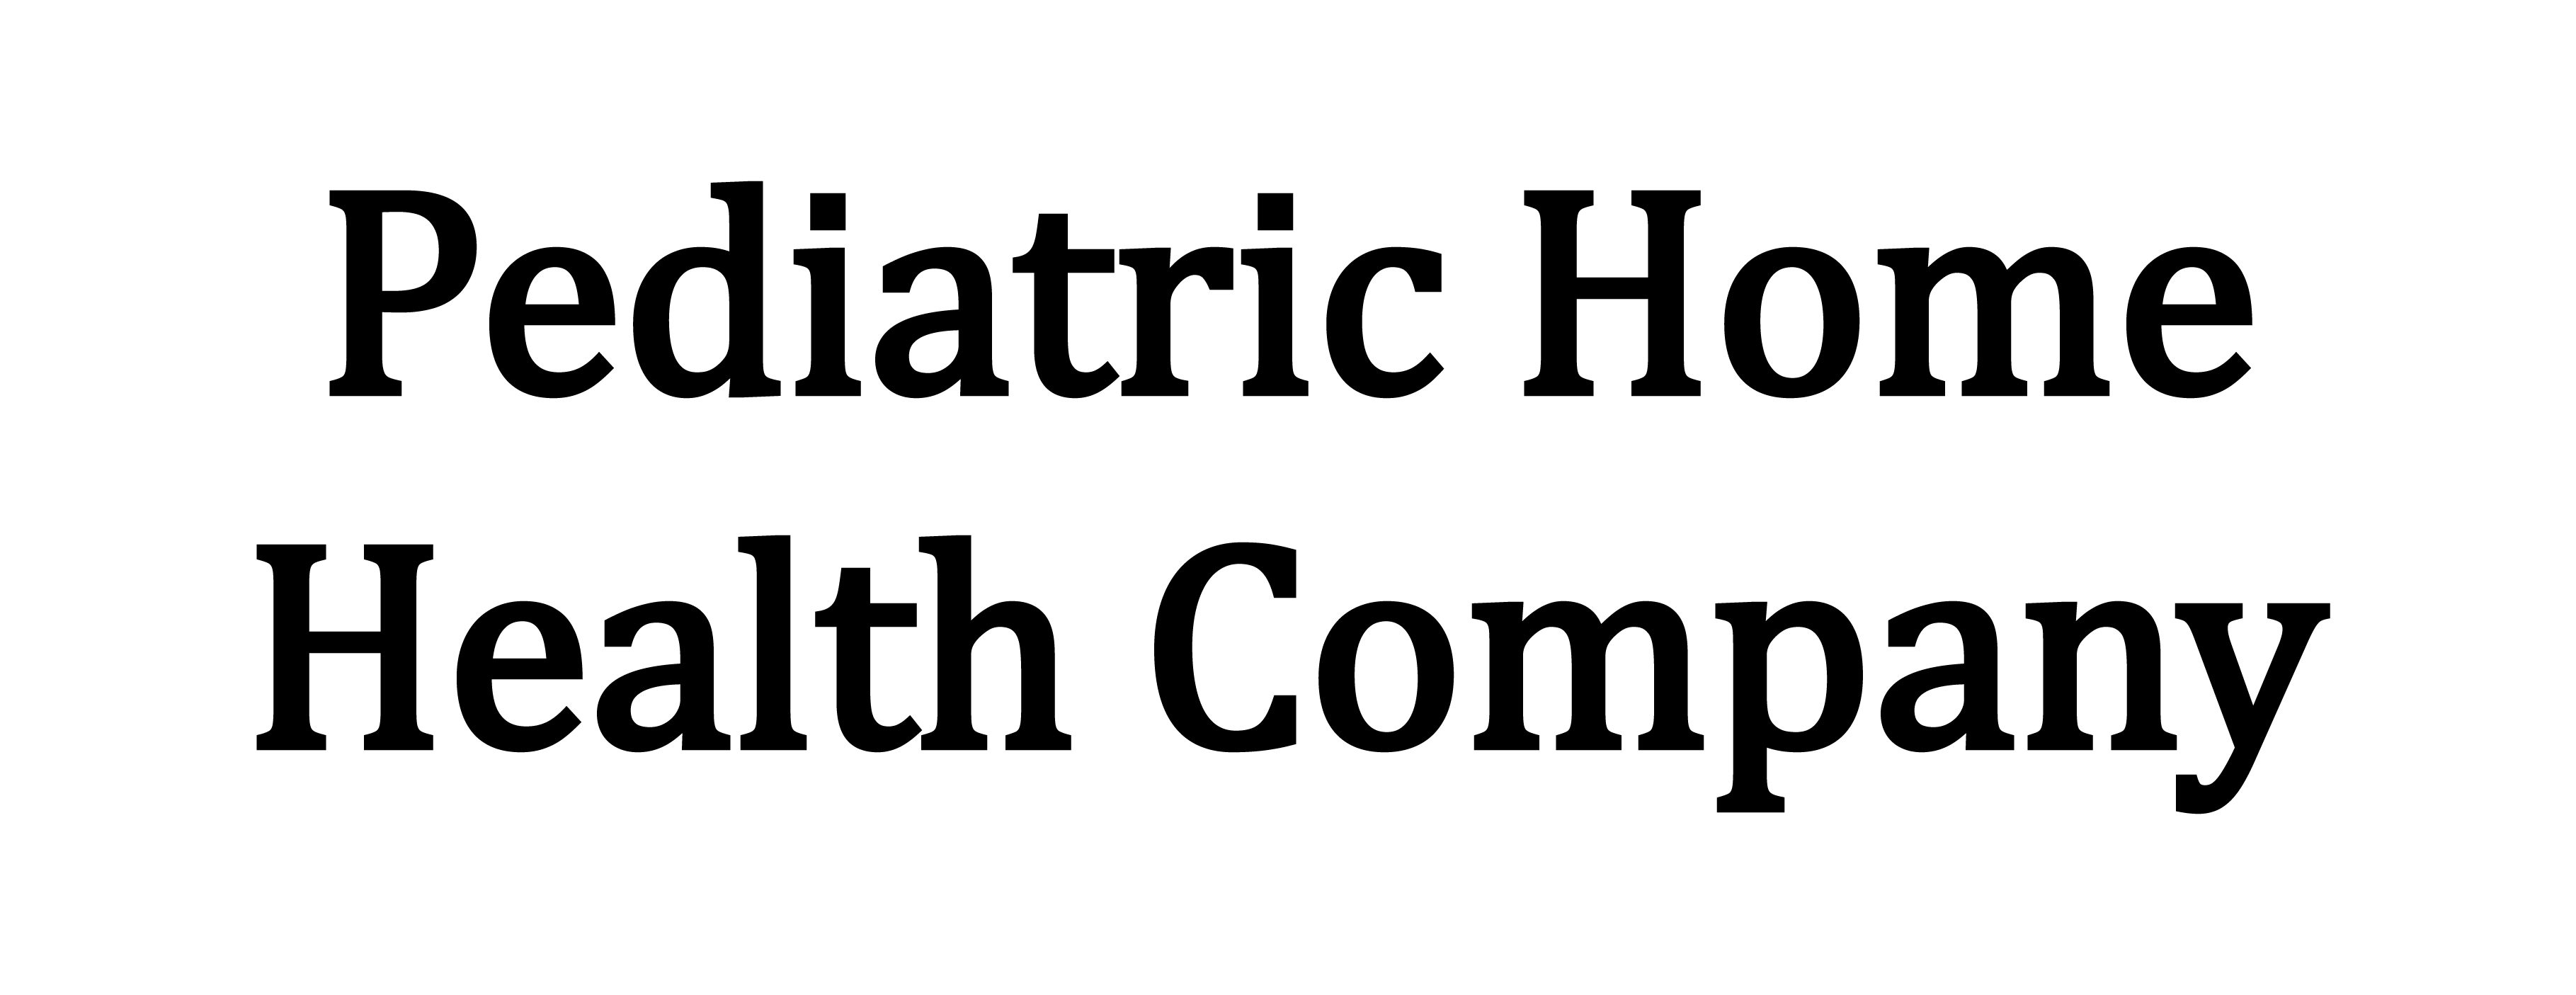 Solace - Pediatric Home Health Company _ Text Logo